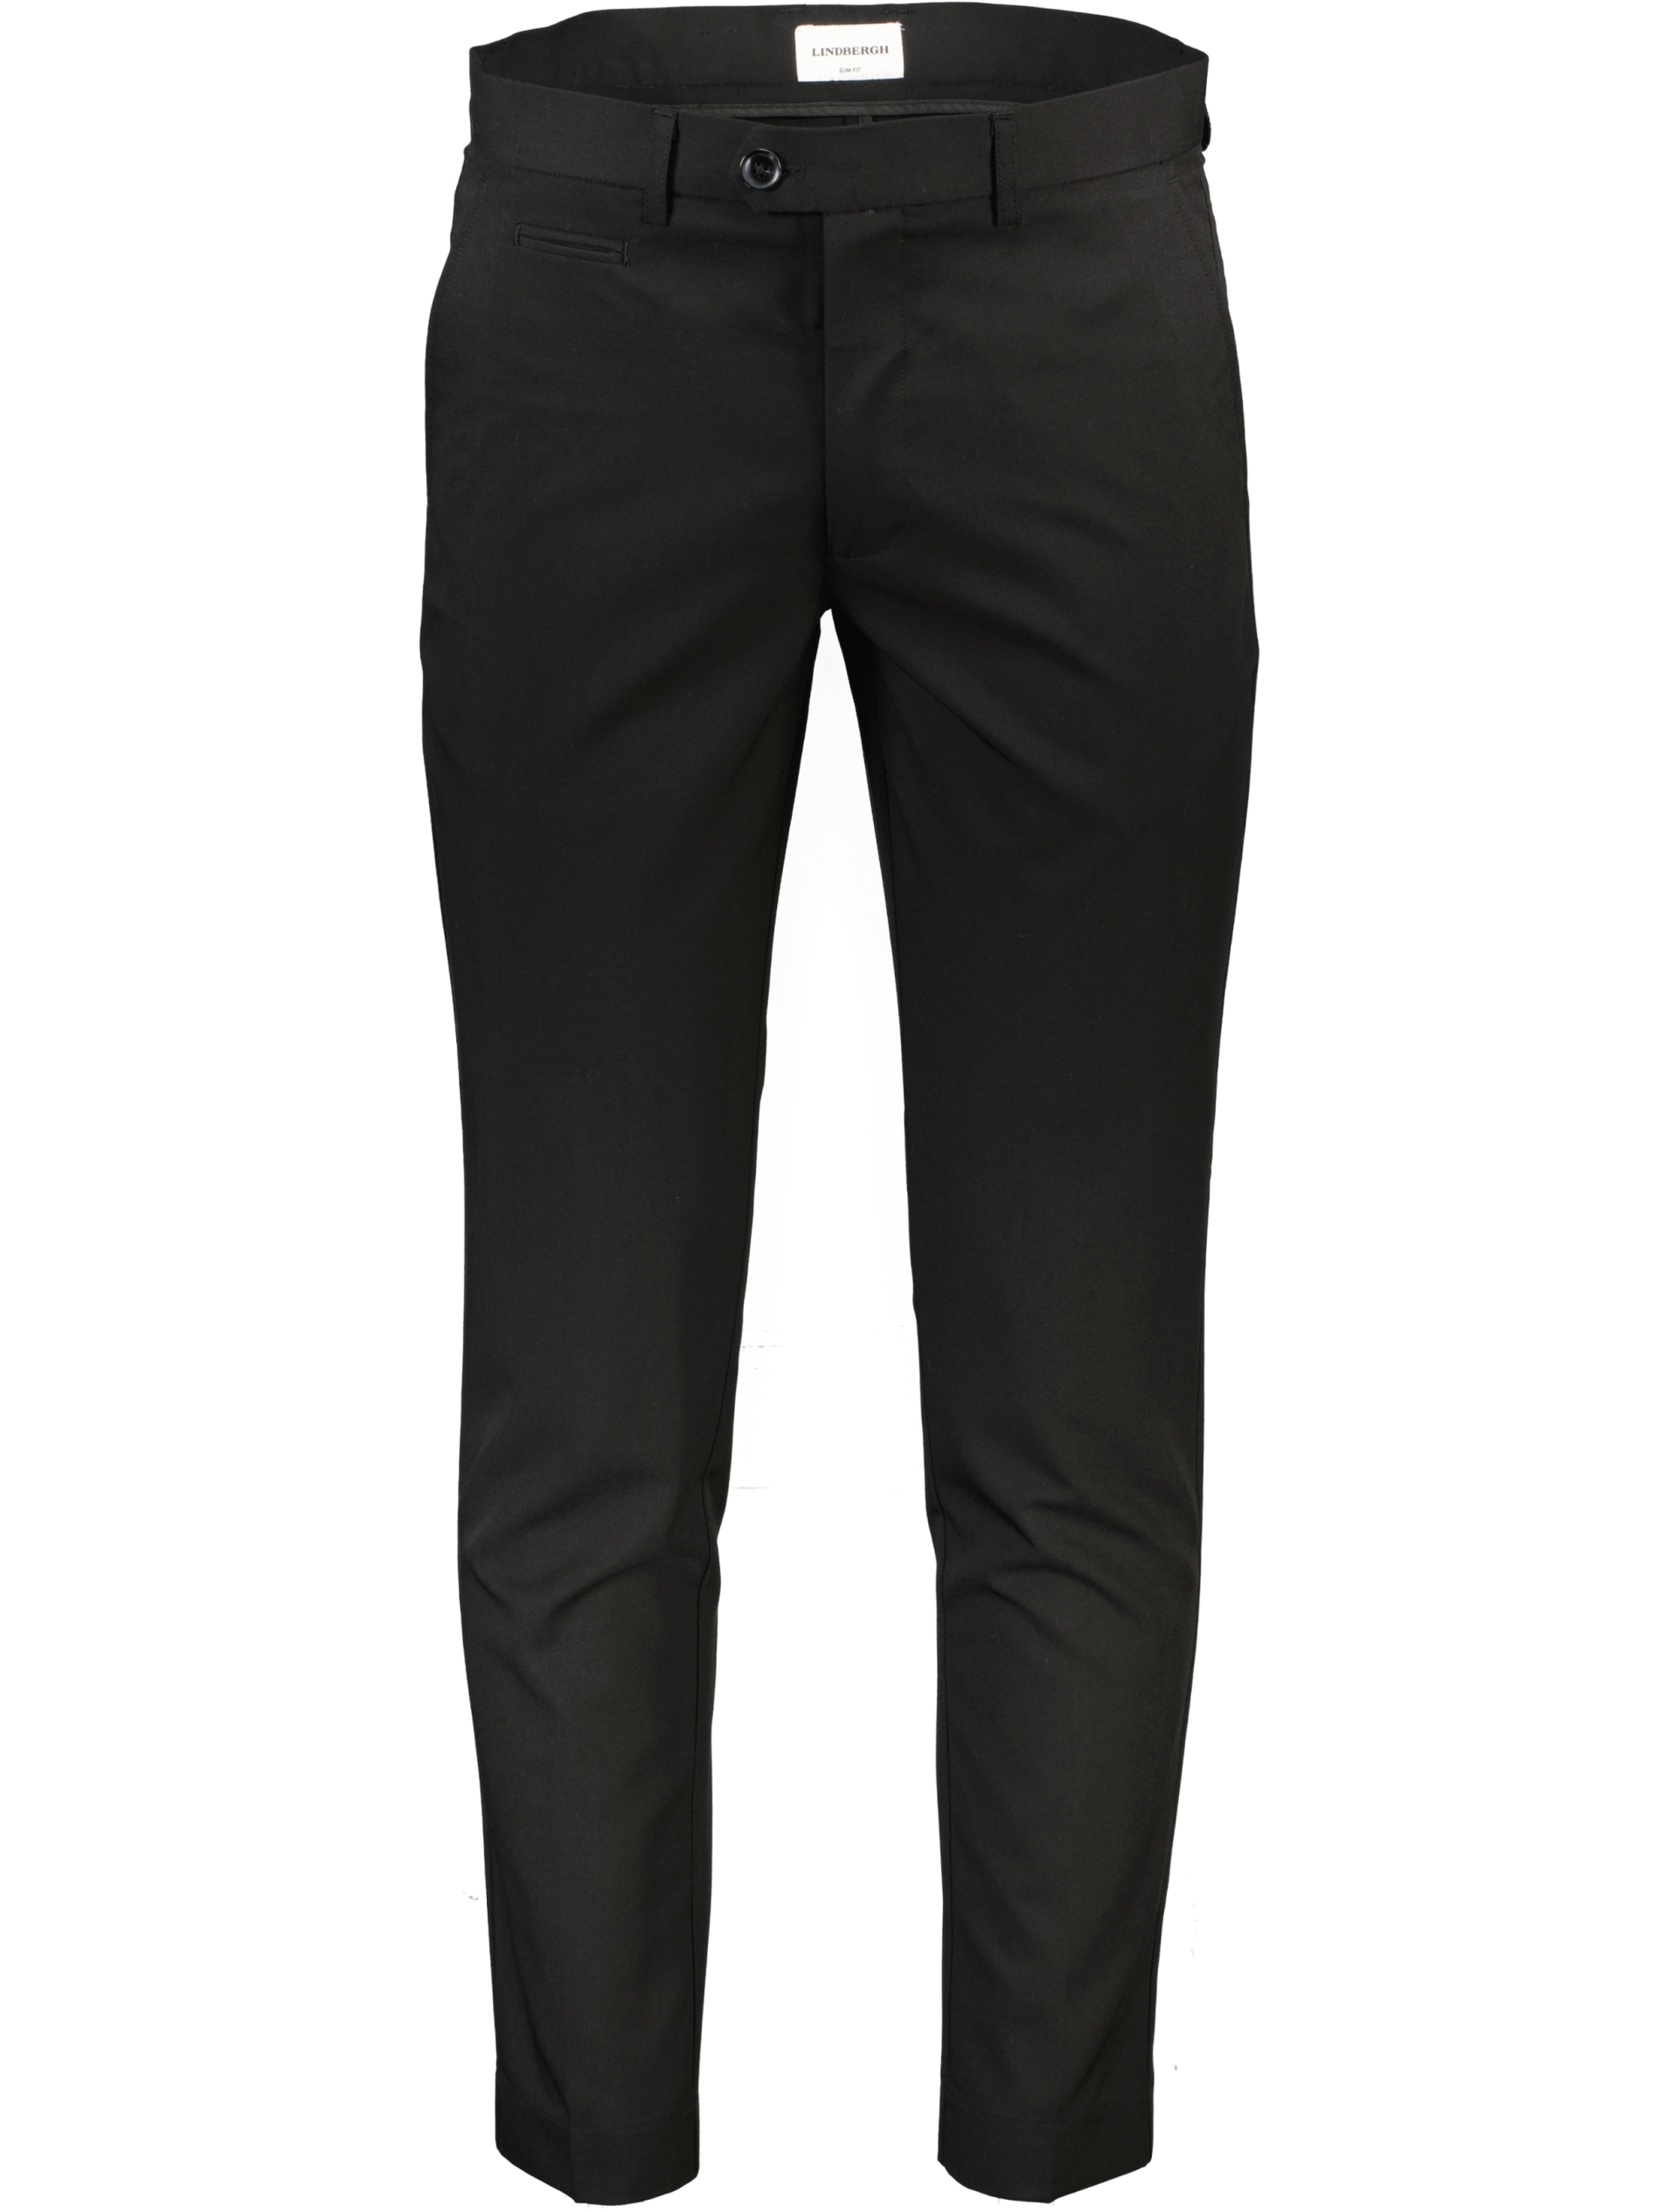 Lindbergh Club-pants black / black